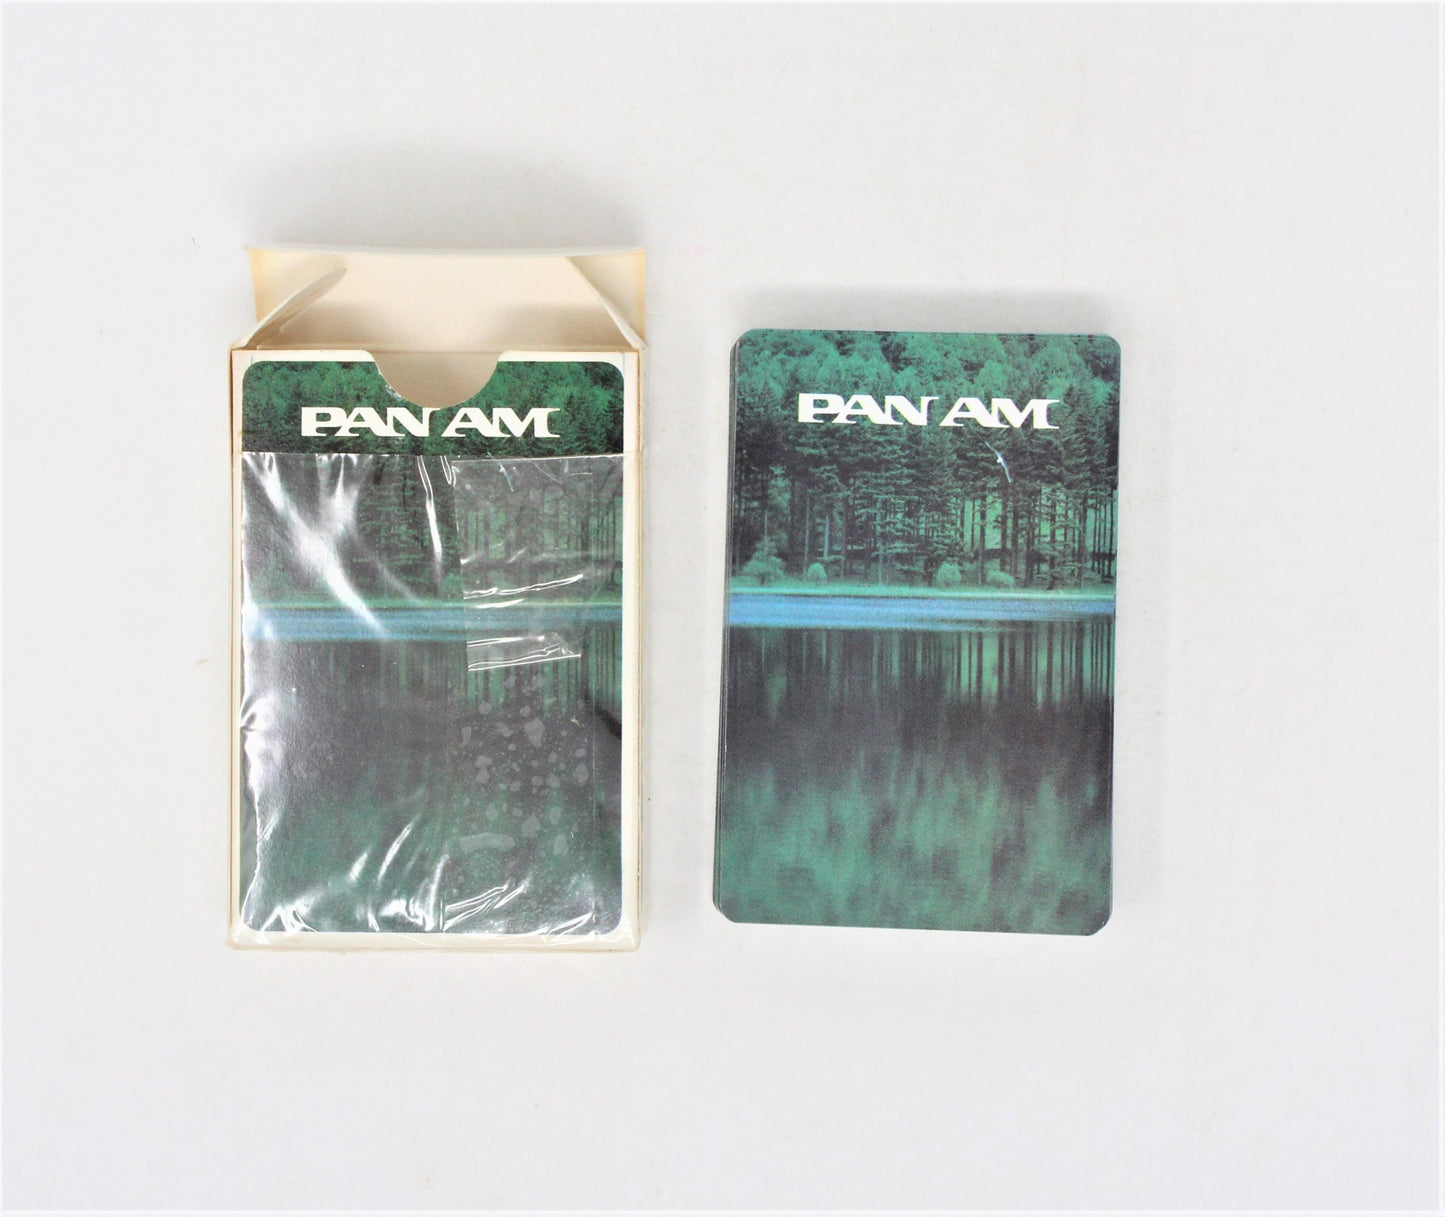 Playing Cards, Pan Am, Destination Cards, England, Stardust NU-Vue, Vintage